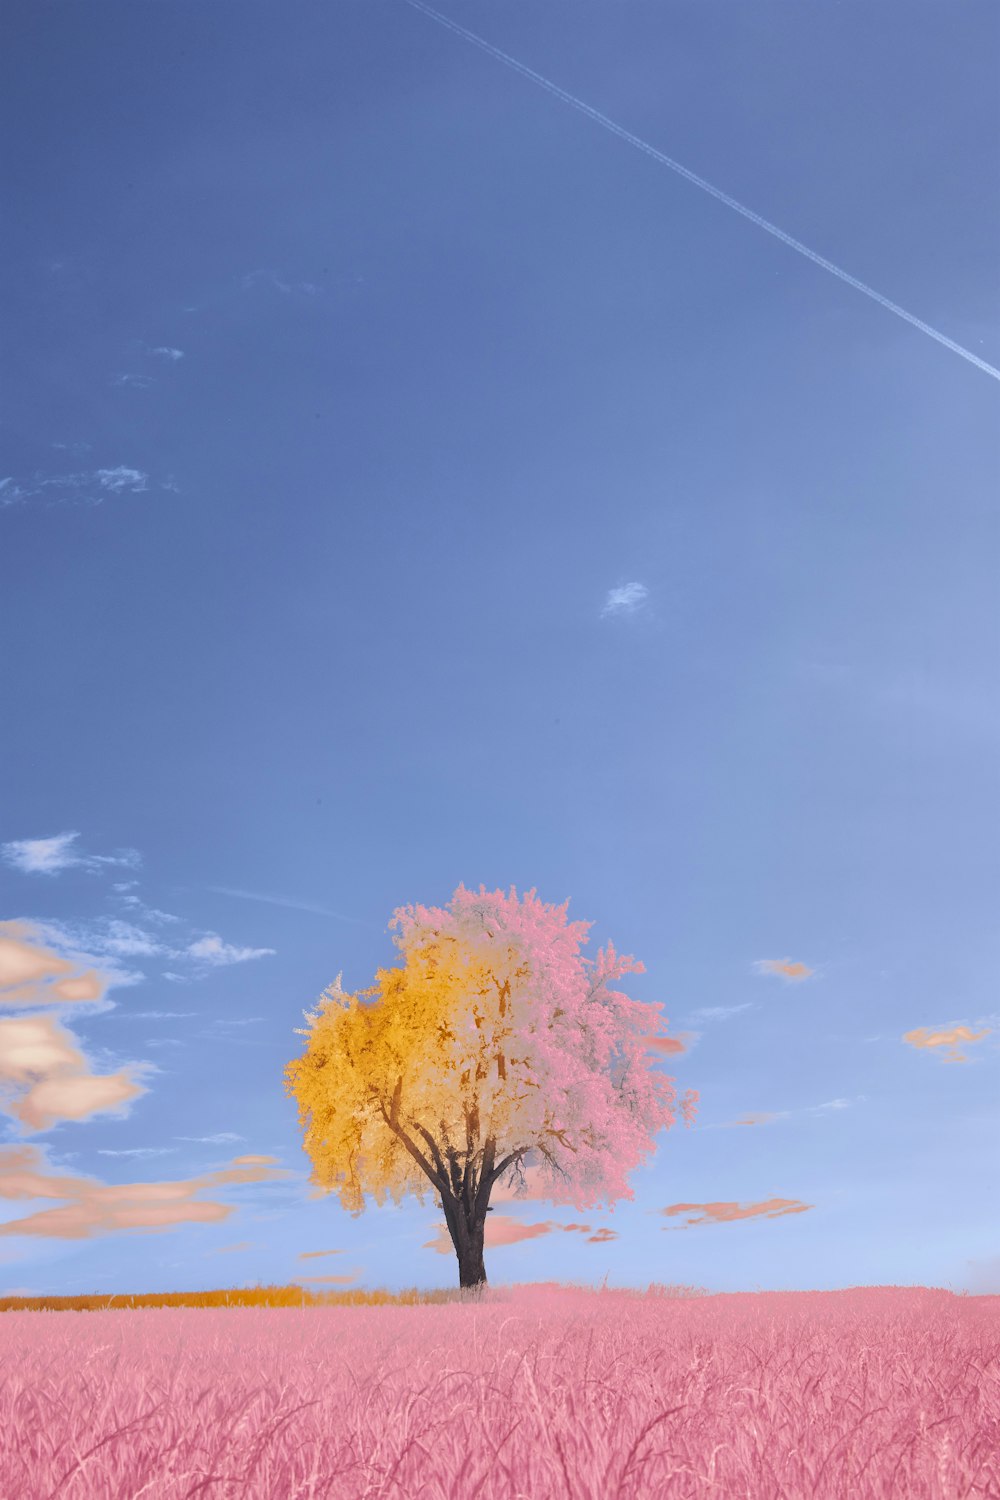 a lone tree in a pink field under a blue sky